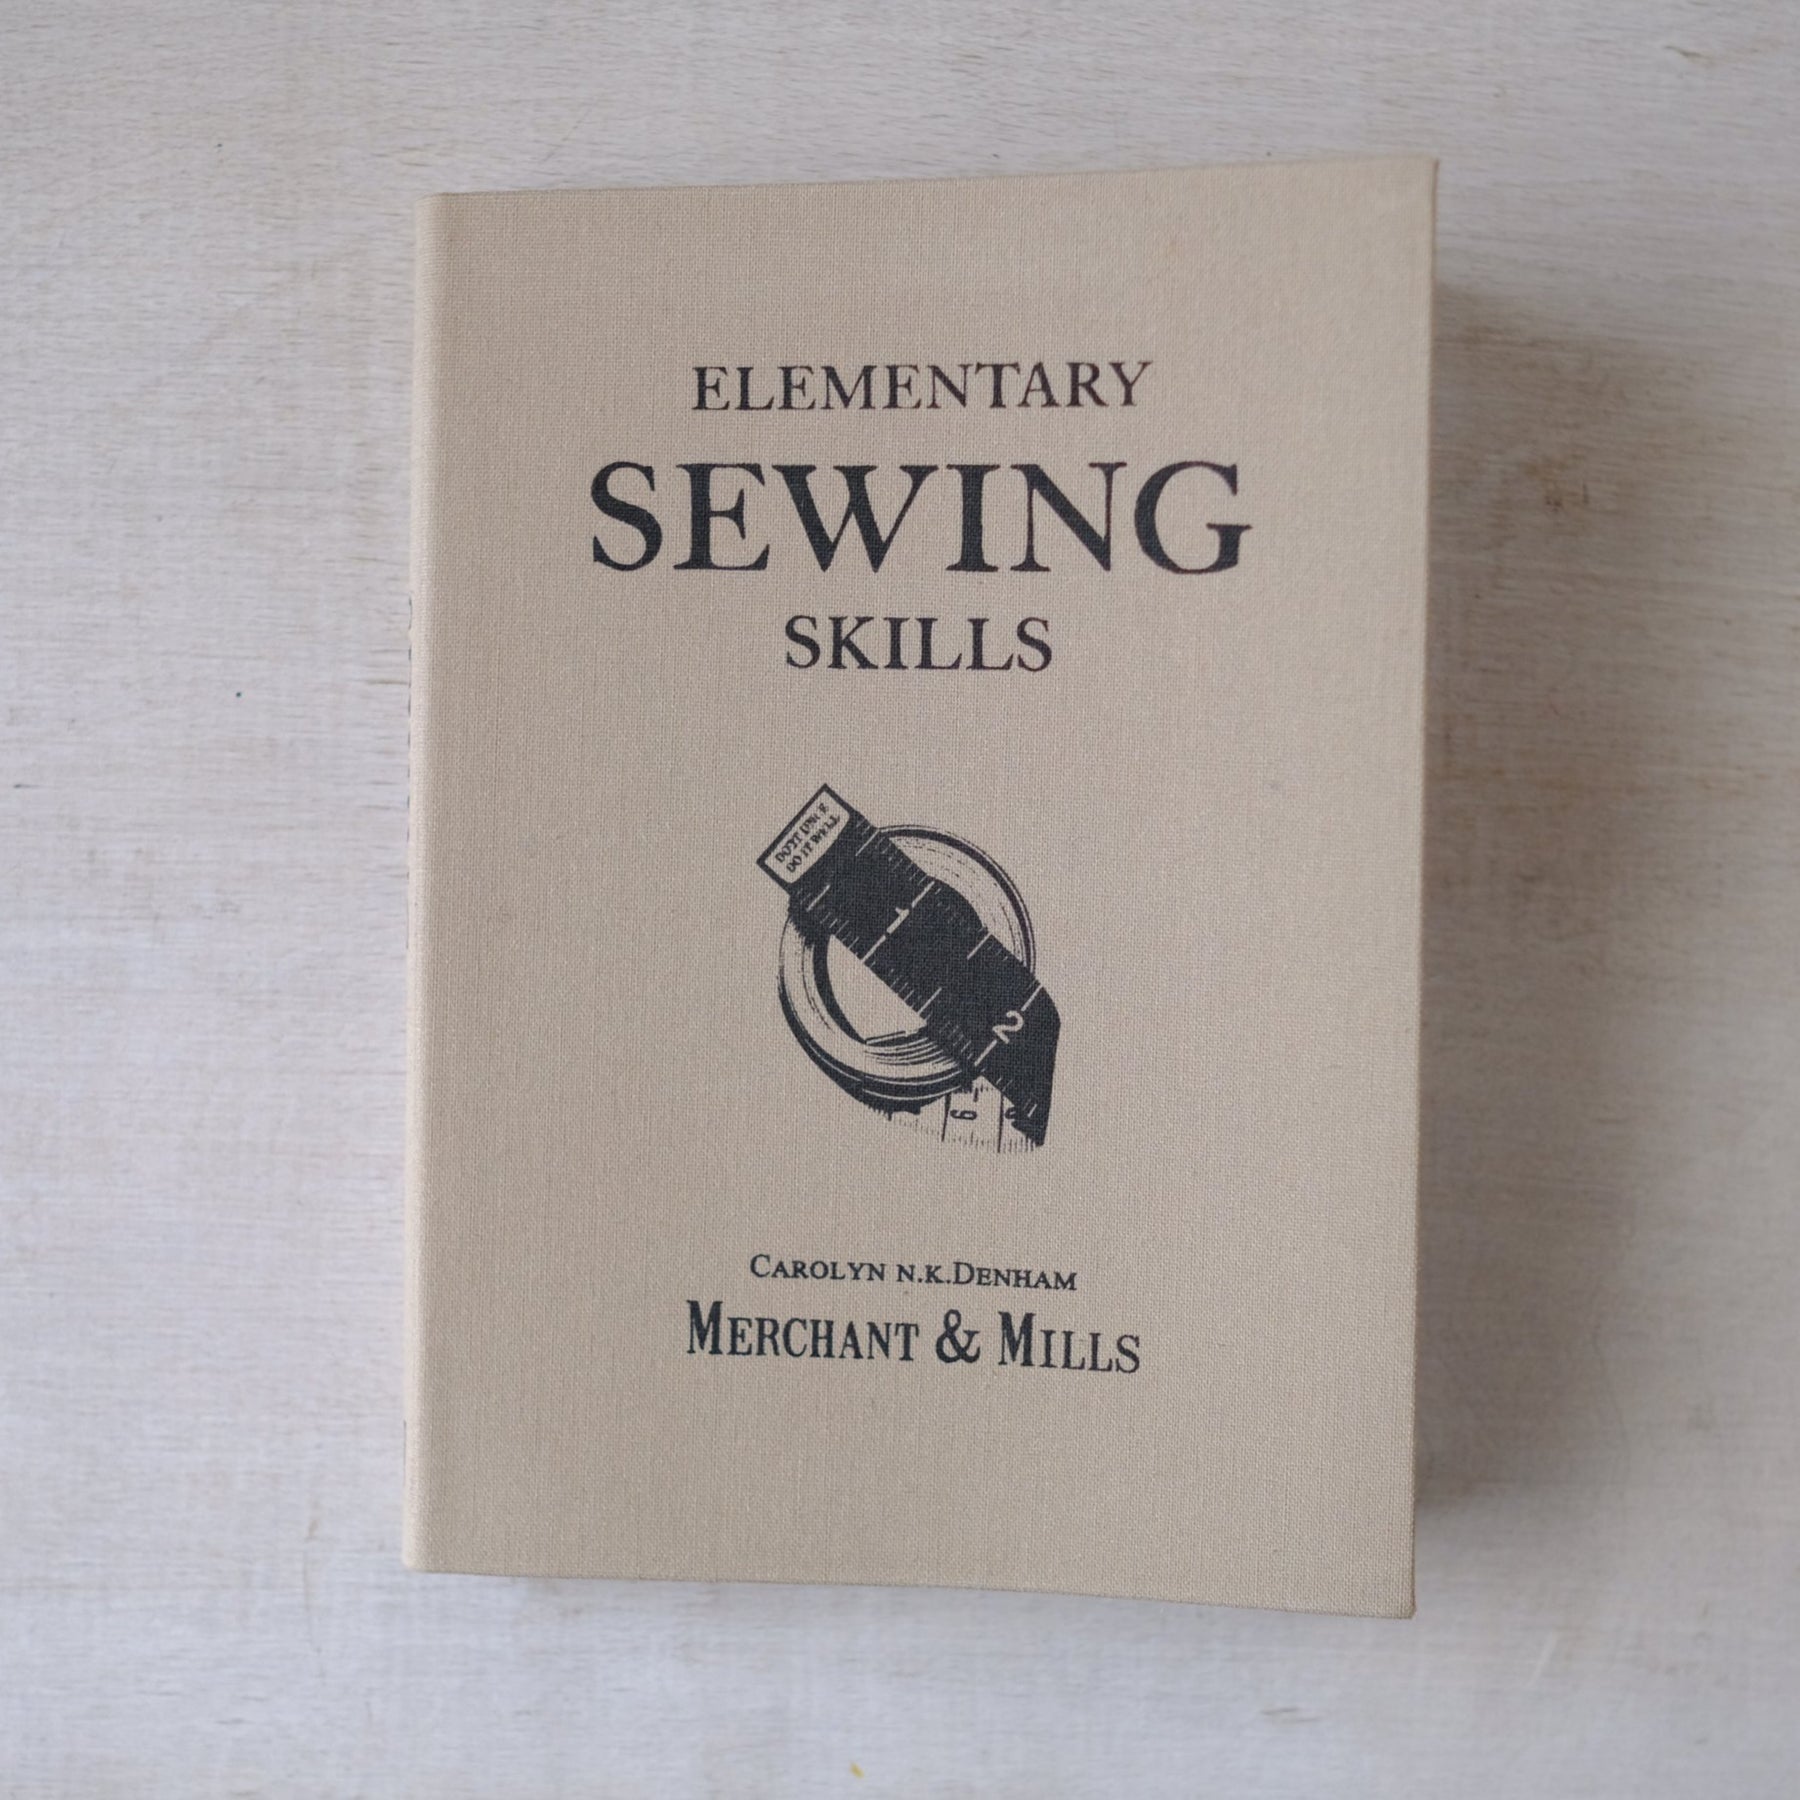 Elementary Sewing Skills